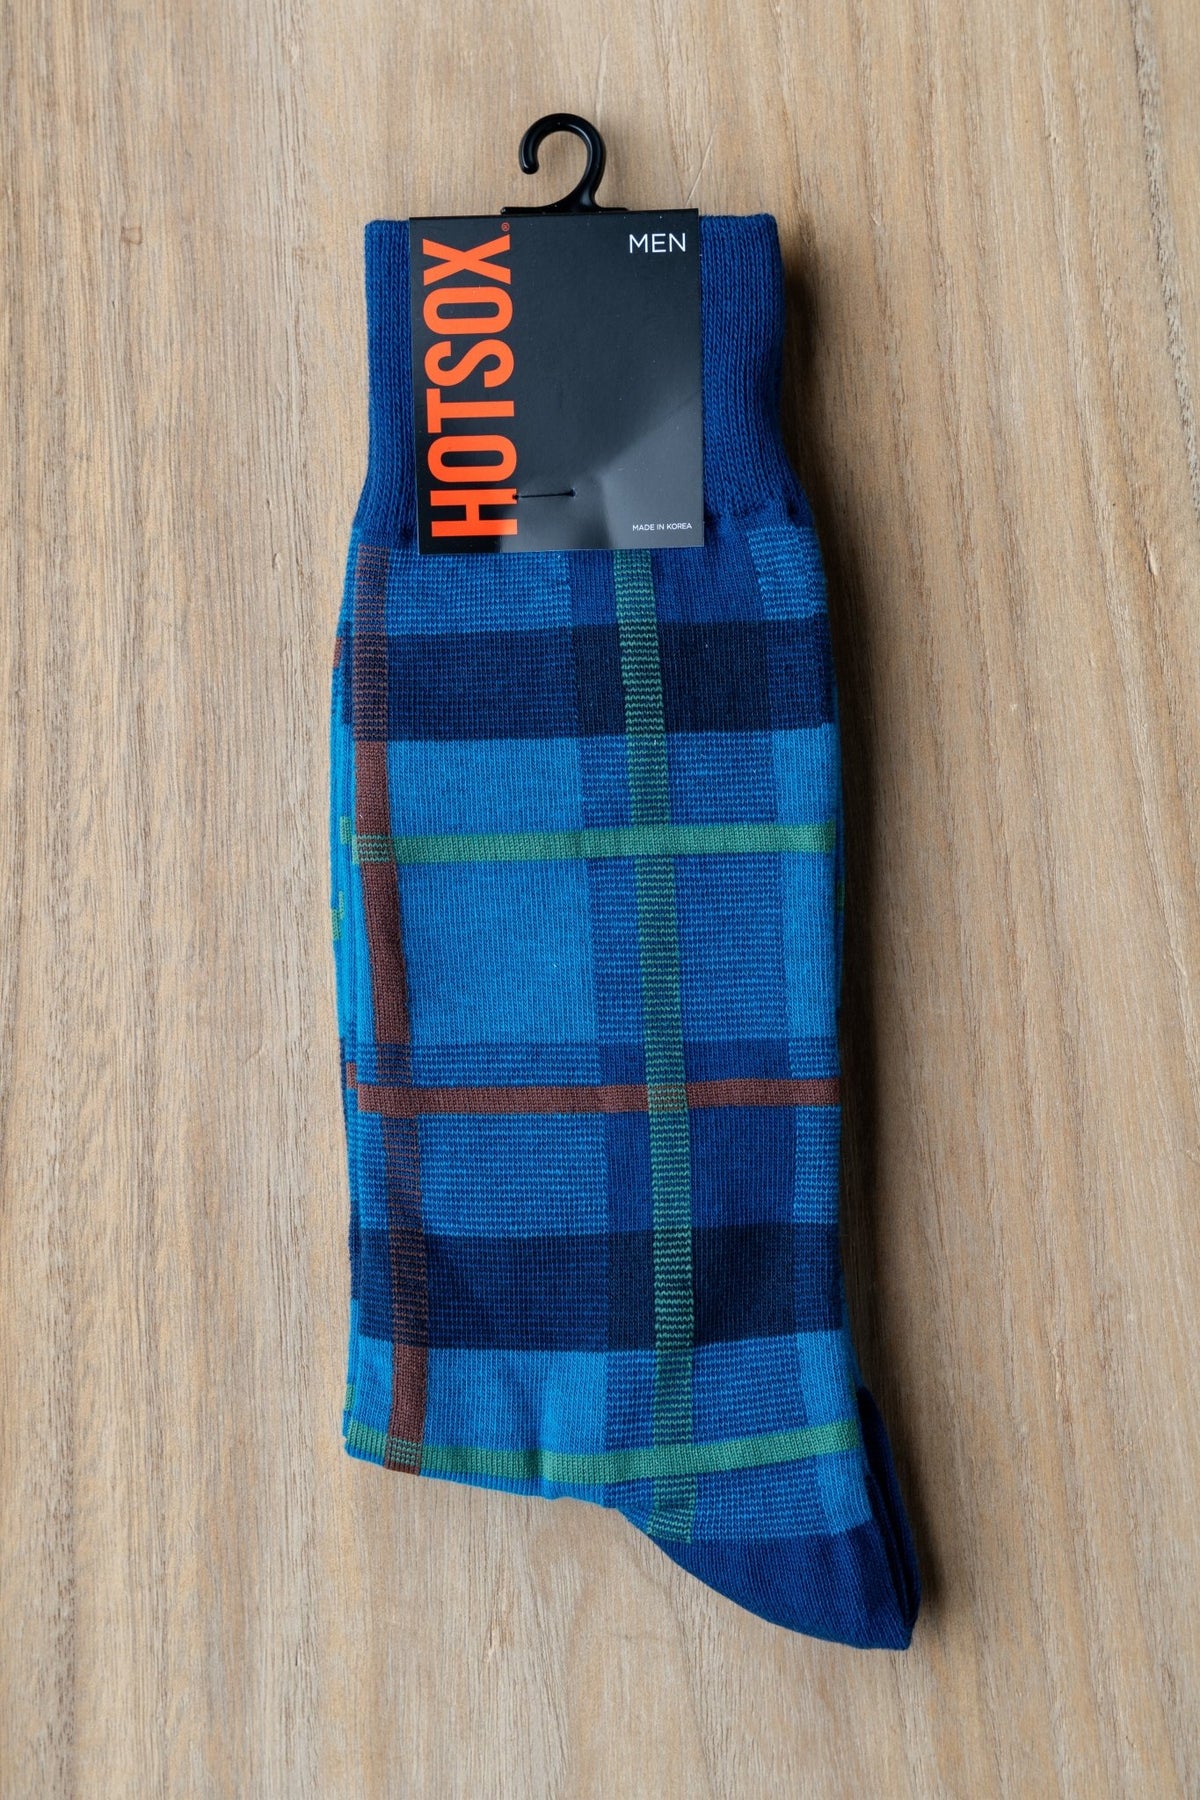 HotSox plaid socks teal - Trendy Socks at Lush Fashion Lounge Boutique in Oklahoma City